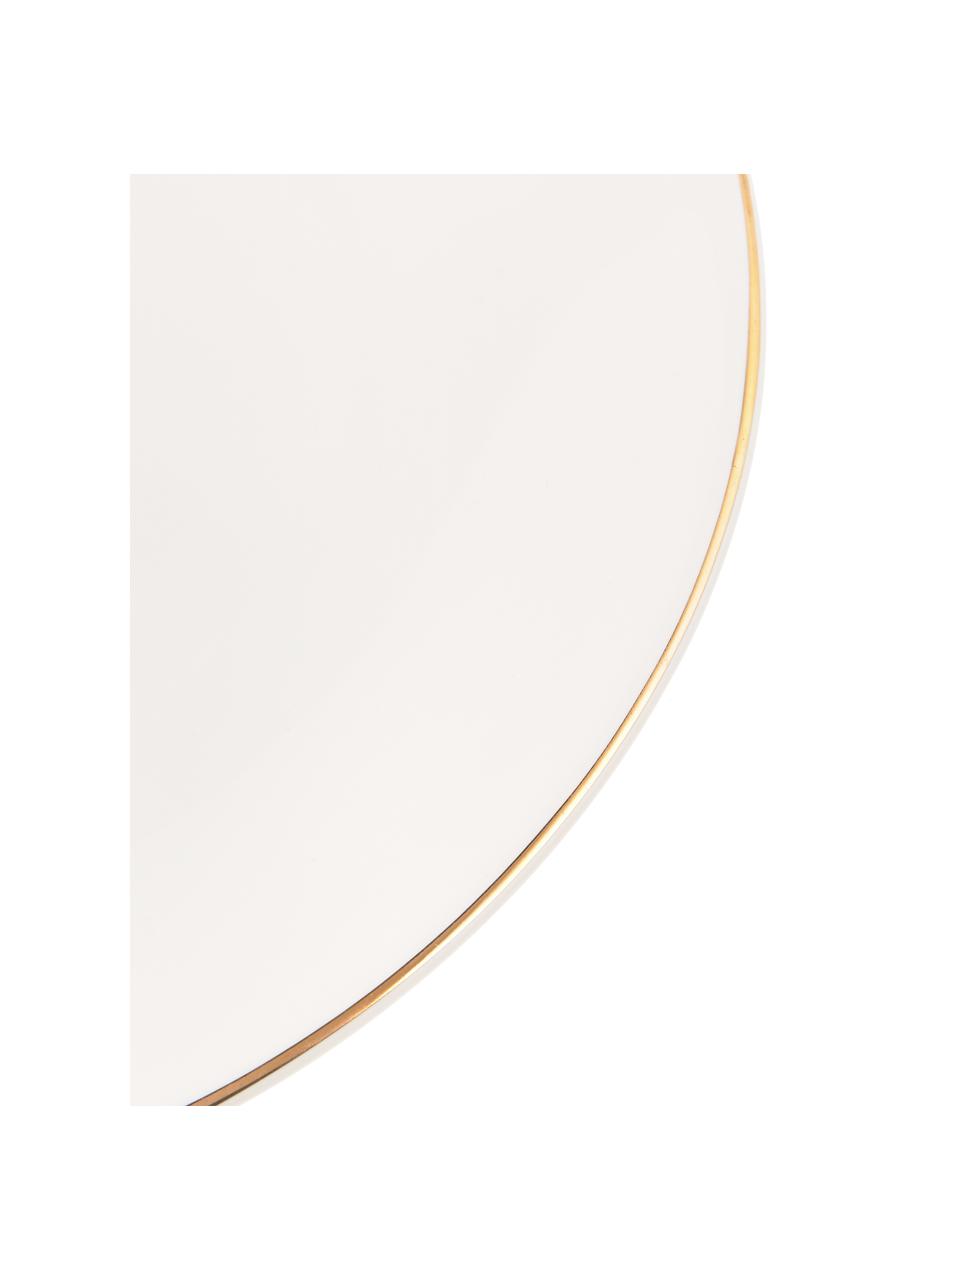 Handgemaakte dinerborden Allure met goudkleurige rand, 6 stuks, Keramiek, Wit, goudkleurig, Ø 26 cm